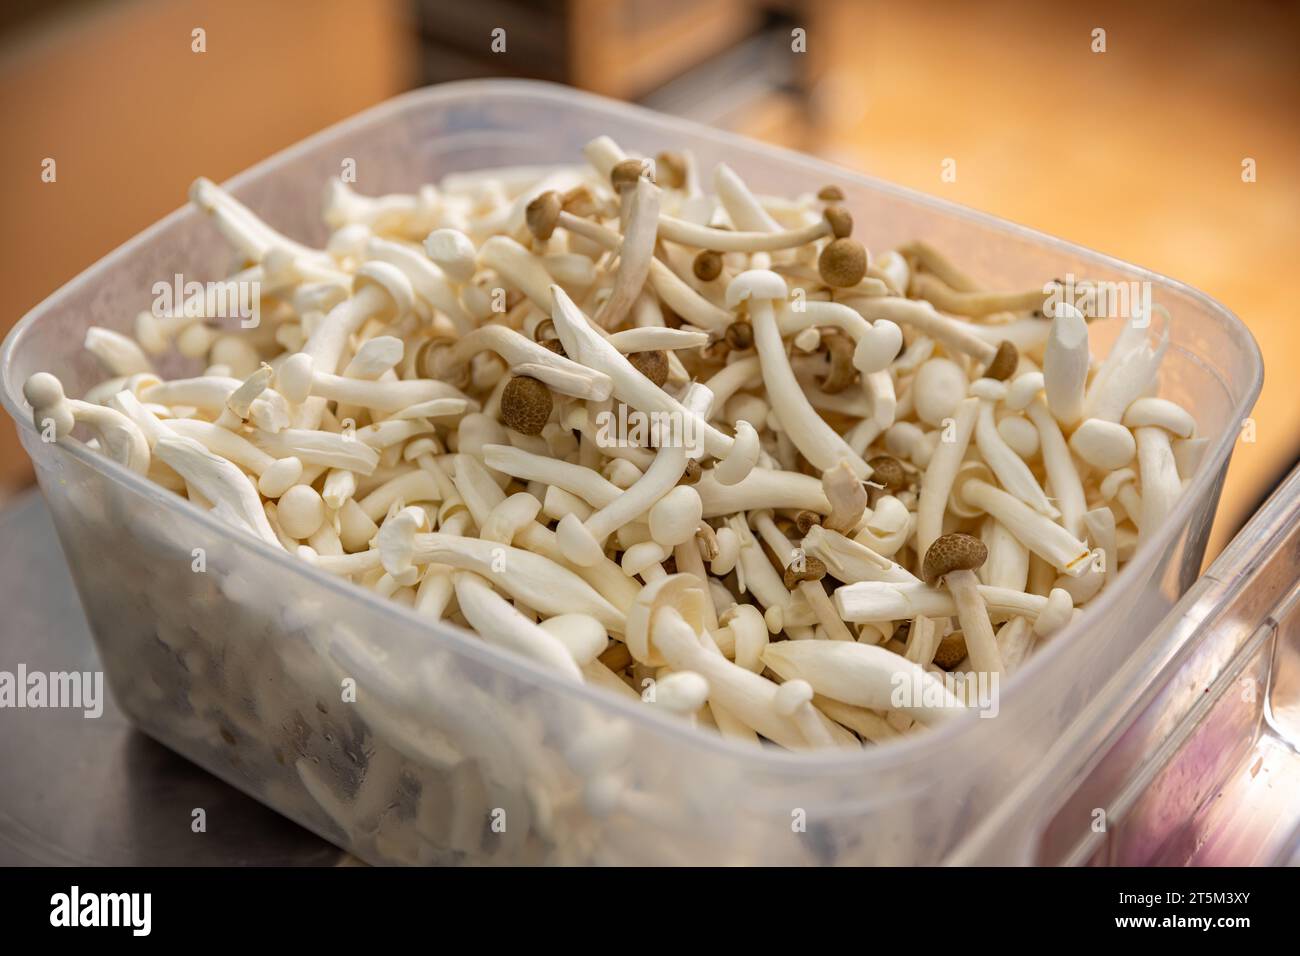 Plastic container brimming with fresh white enoki mushrooms. Stock Photo